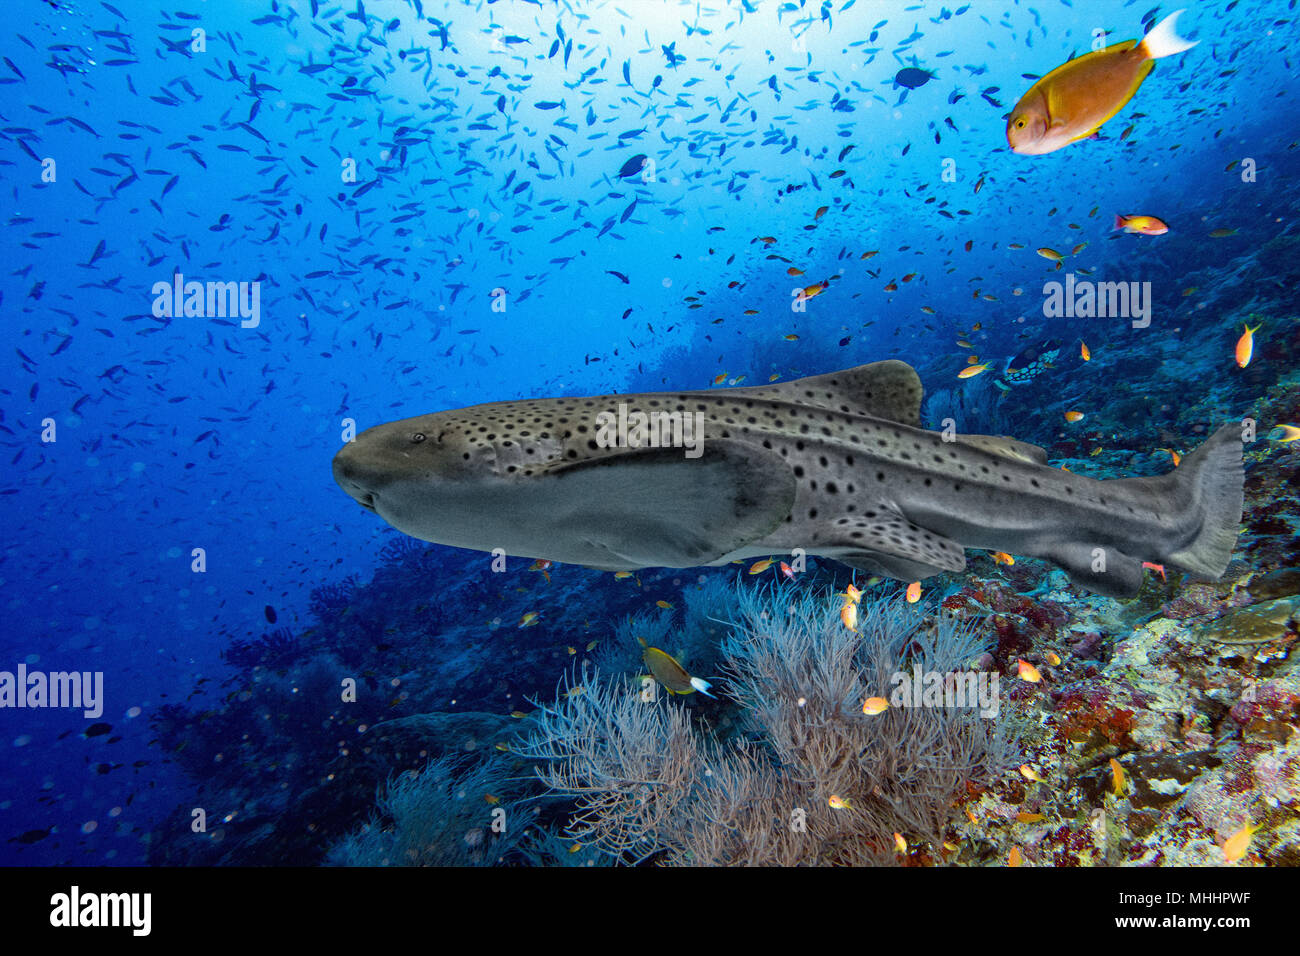 Zebra shark portrait on blue sea and reef background Stock Photo